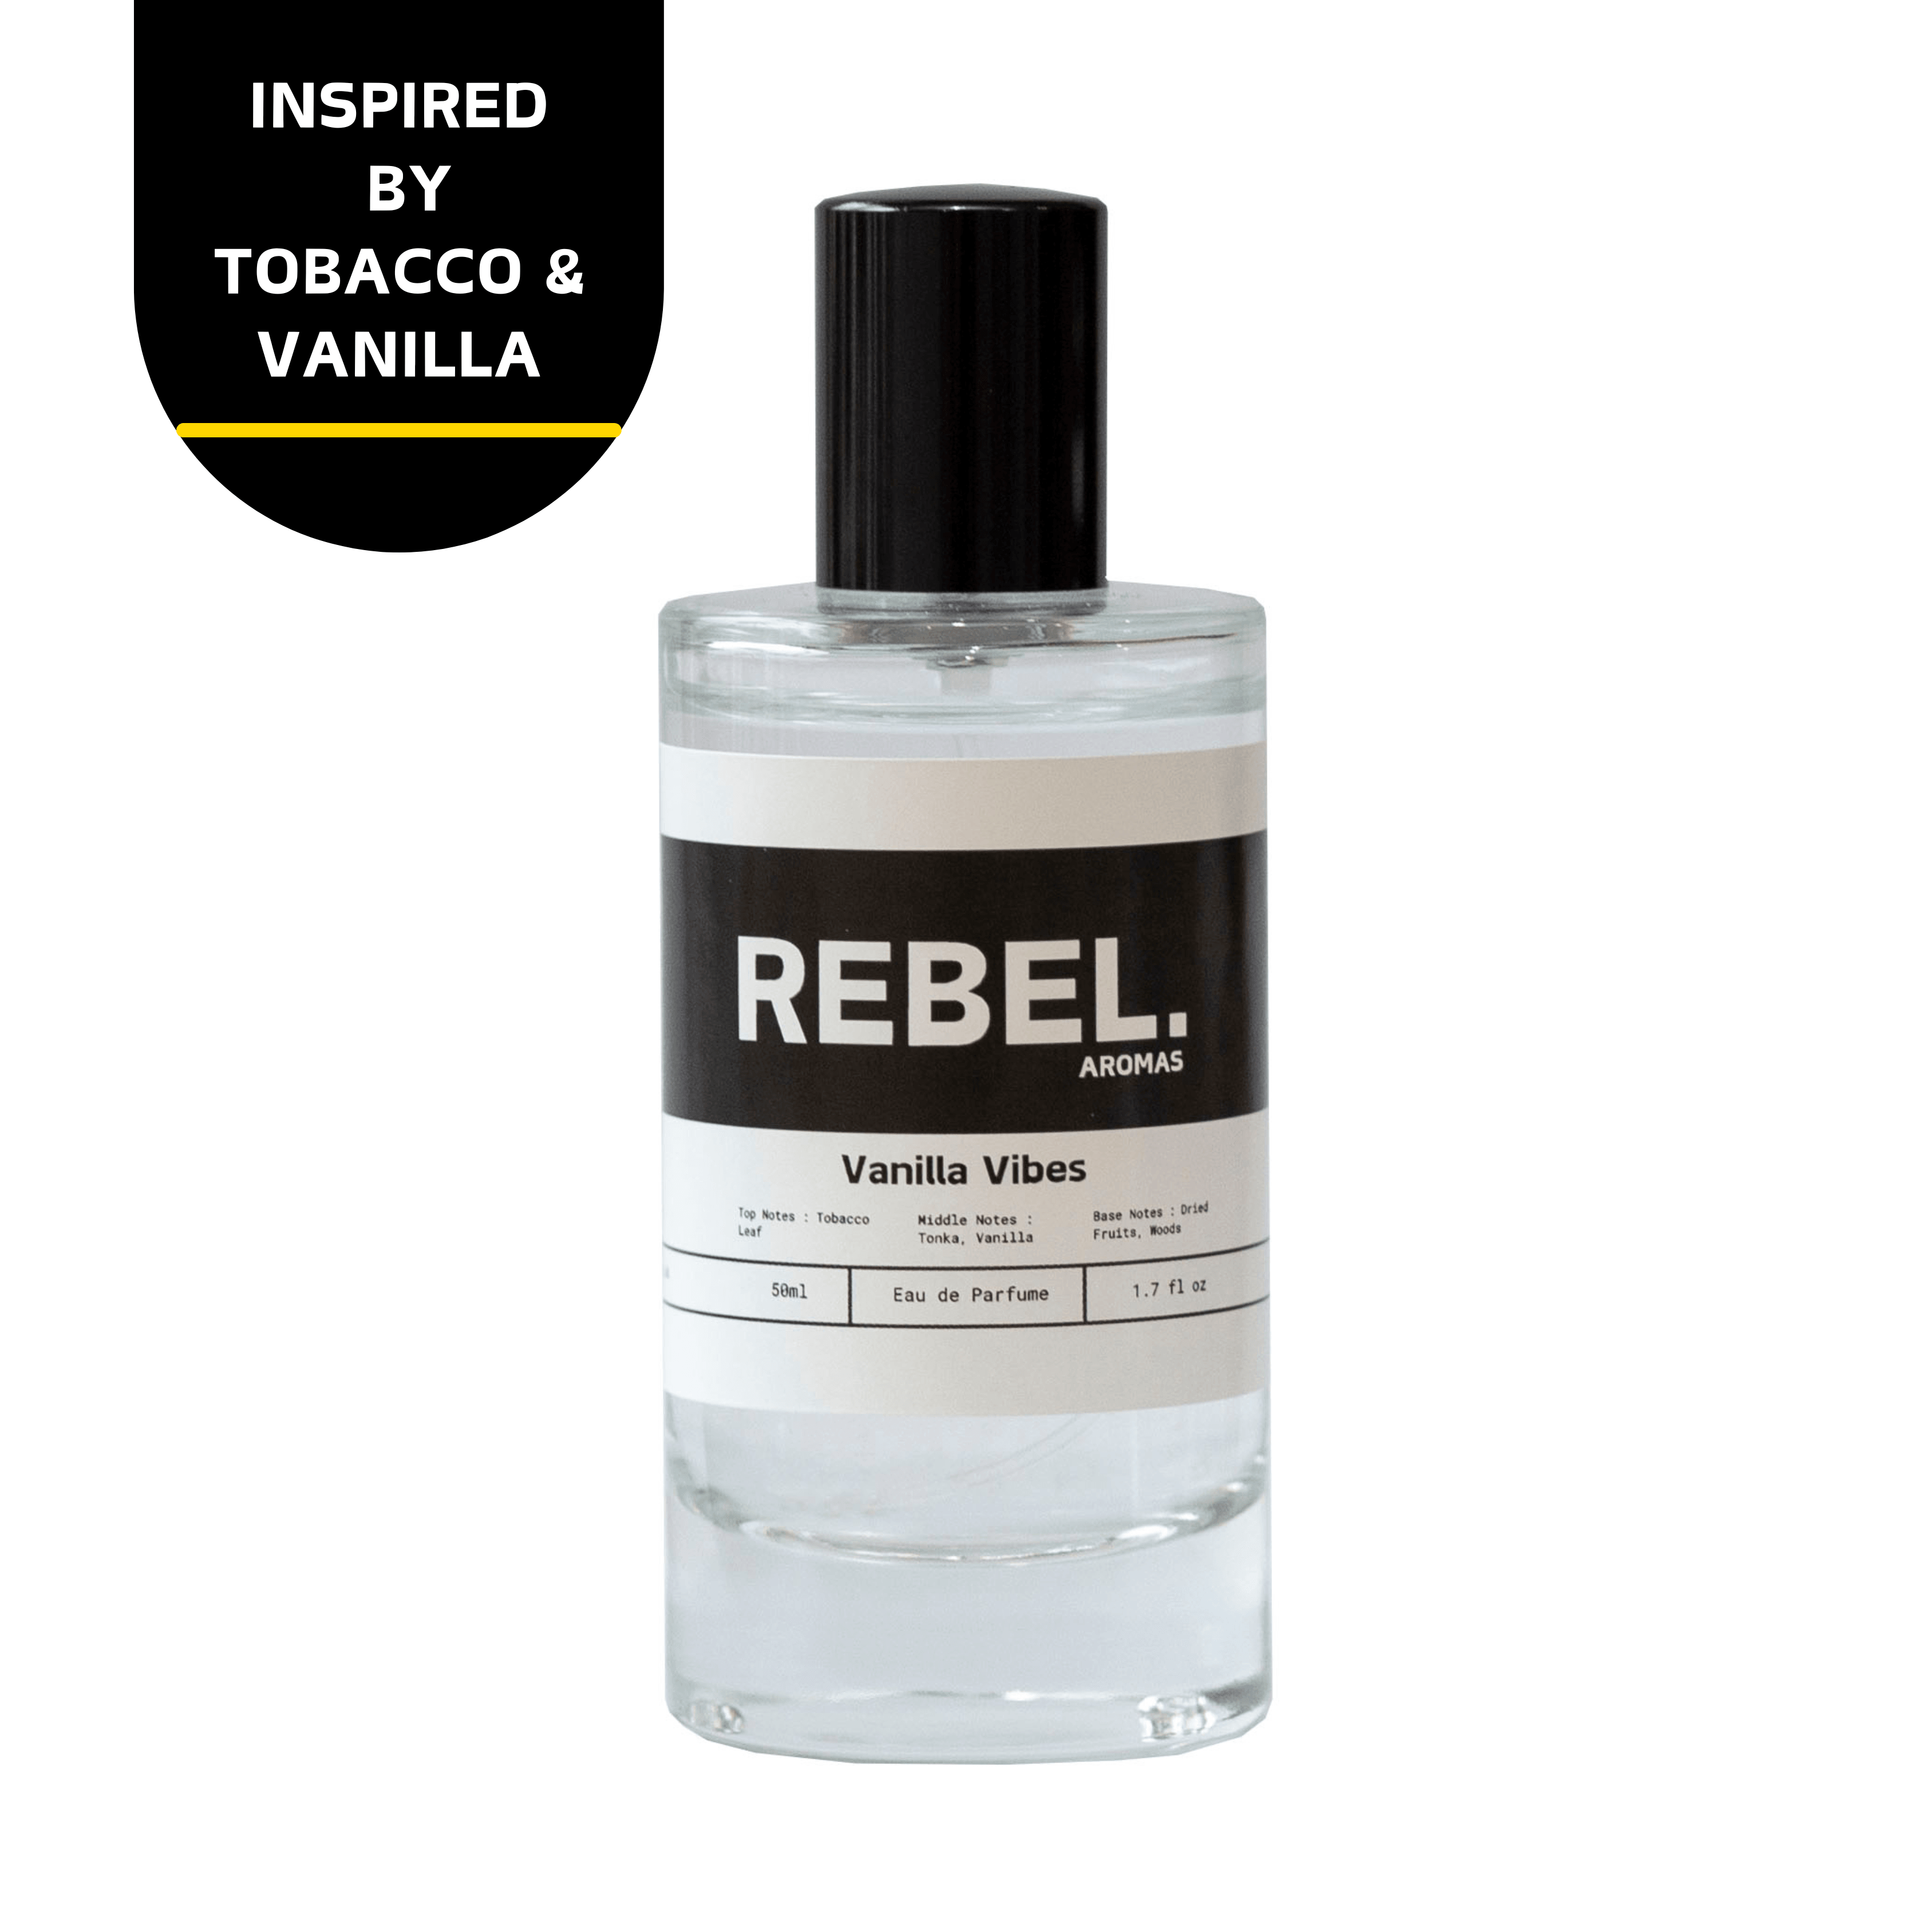 Vanilla Vibes - Rebel Aromas